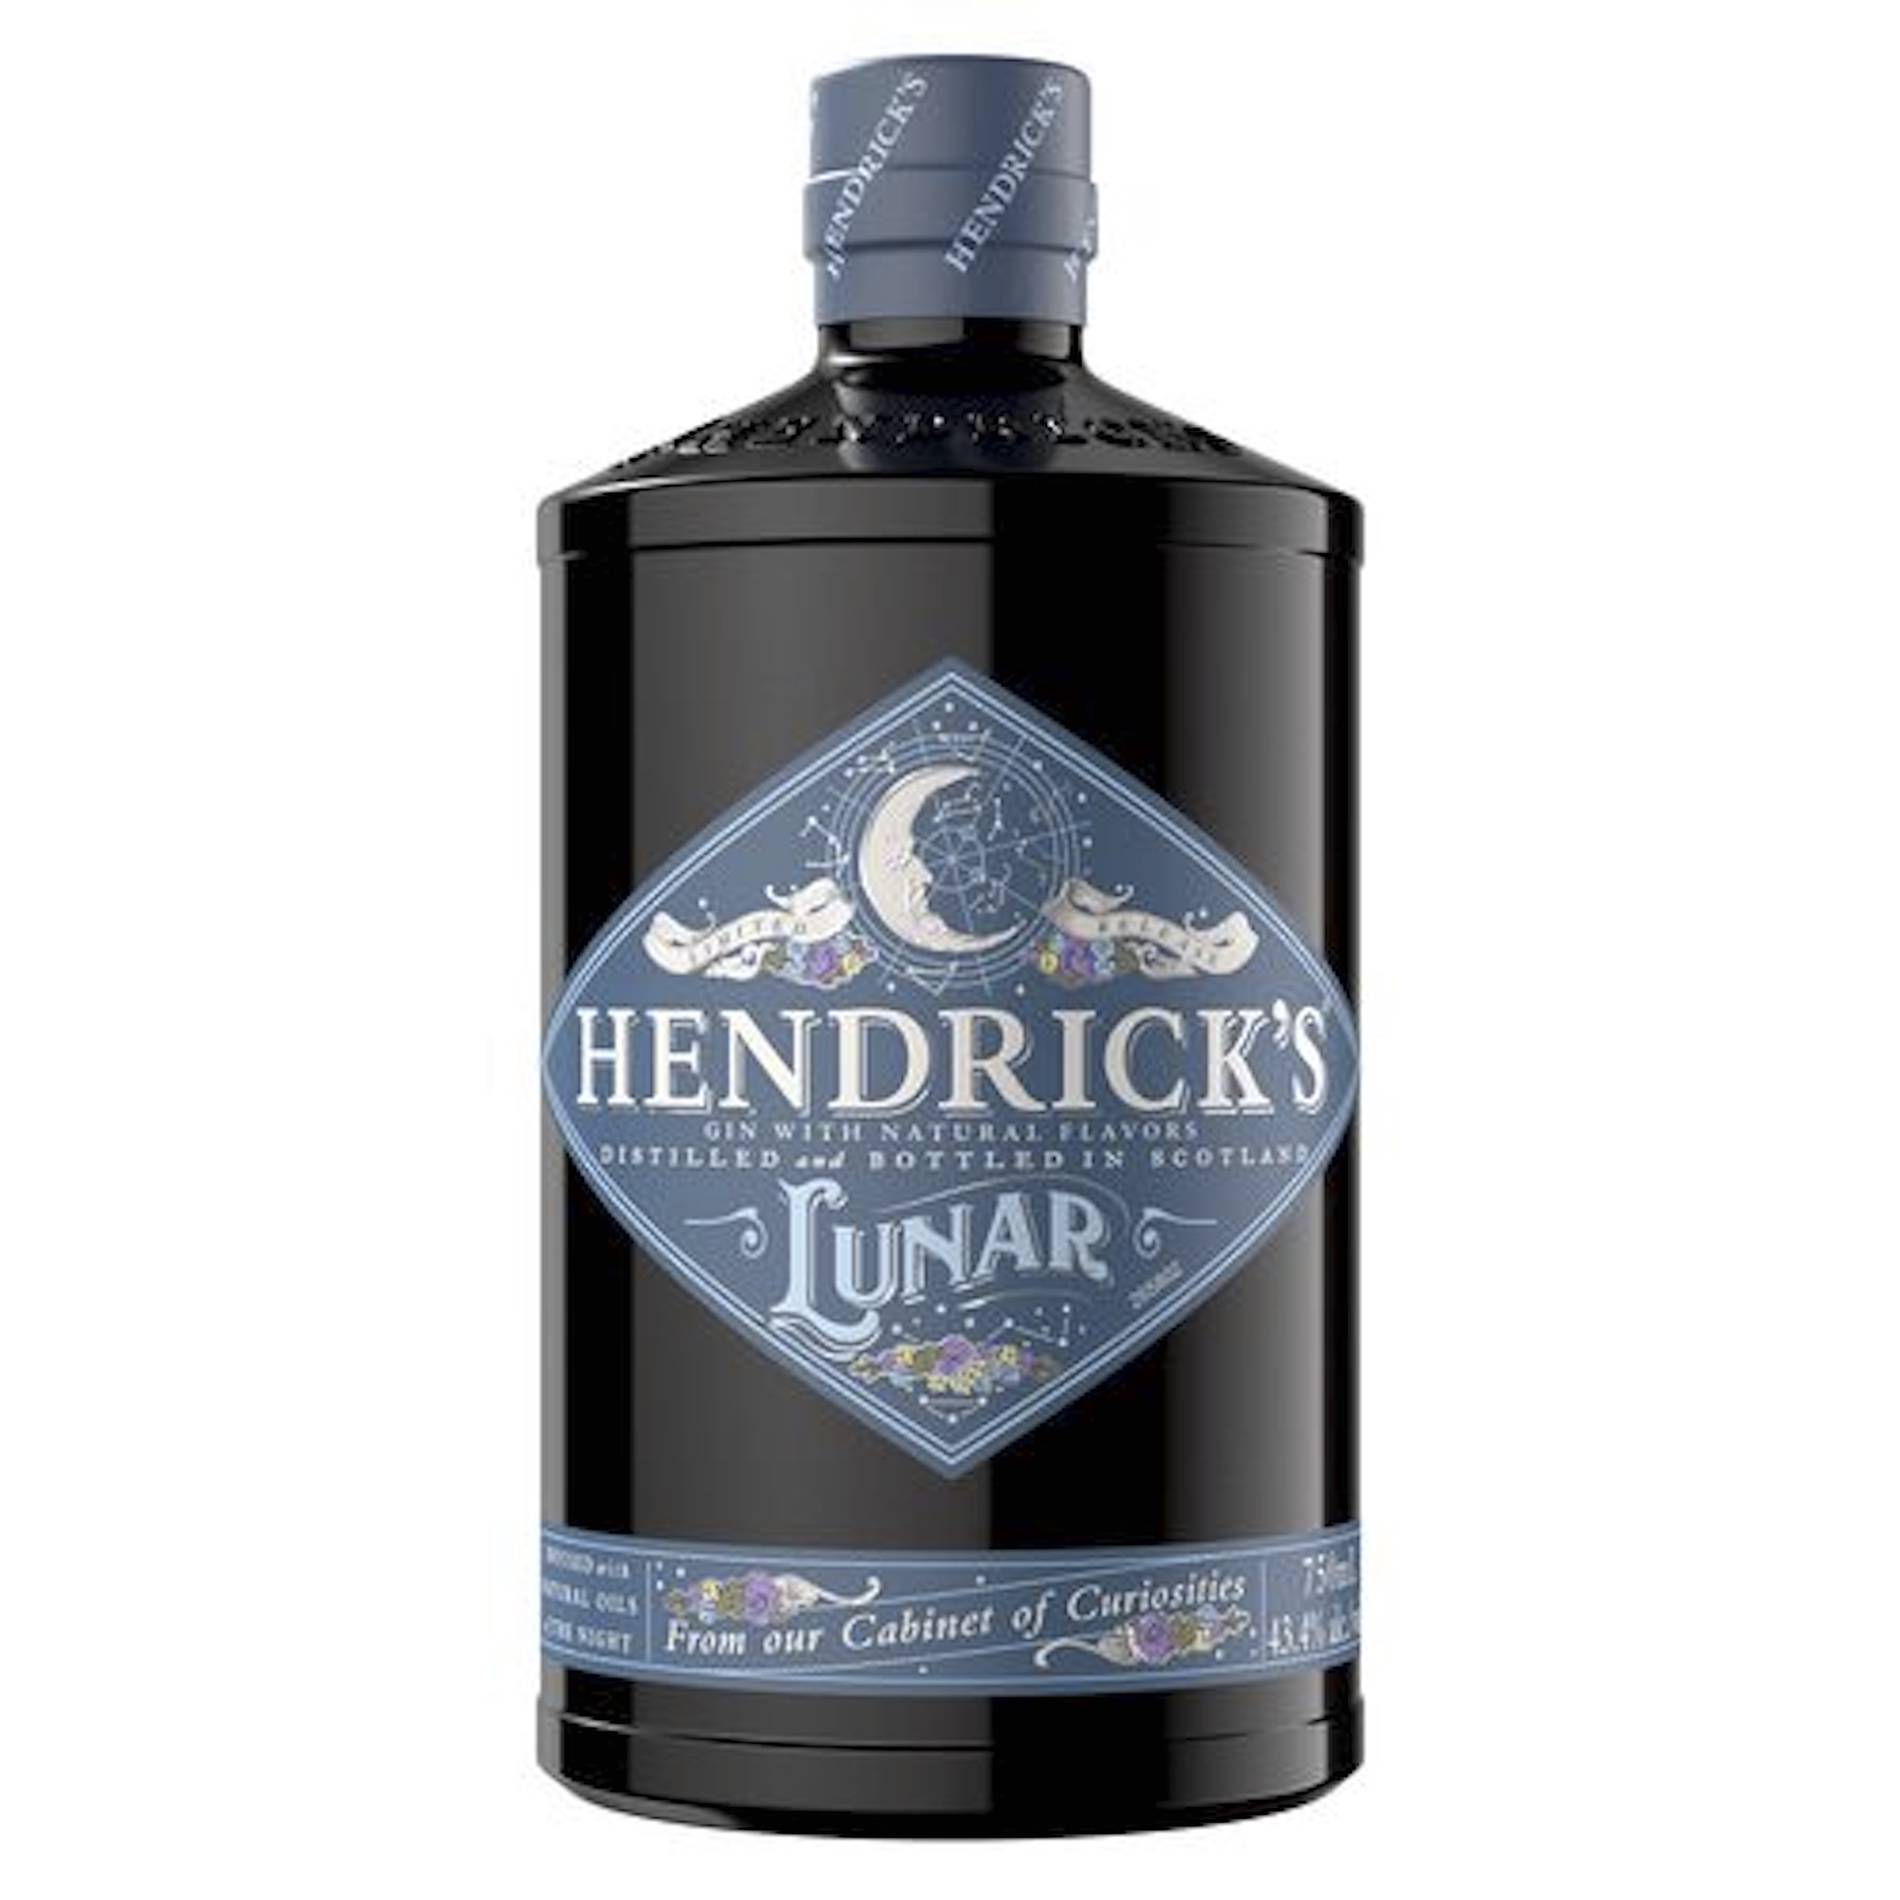 Hendricks lunar gin